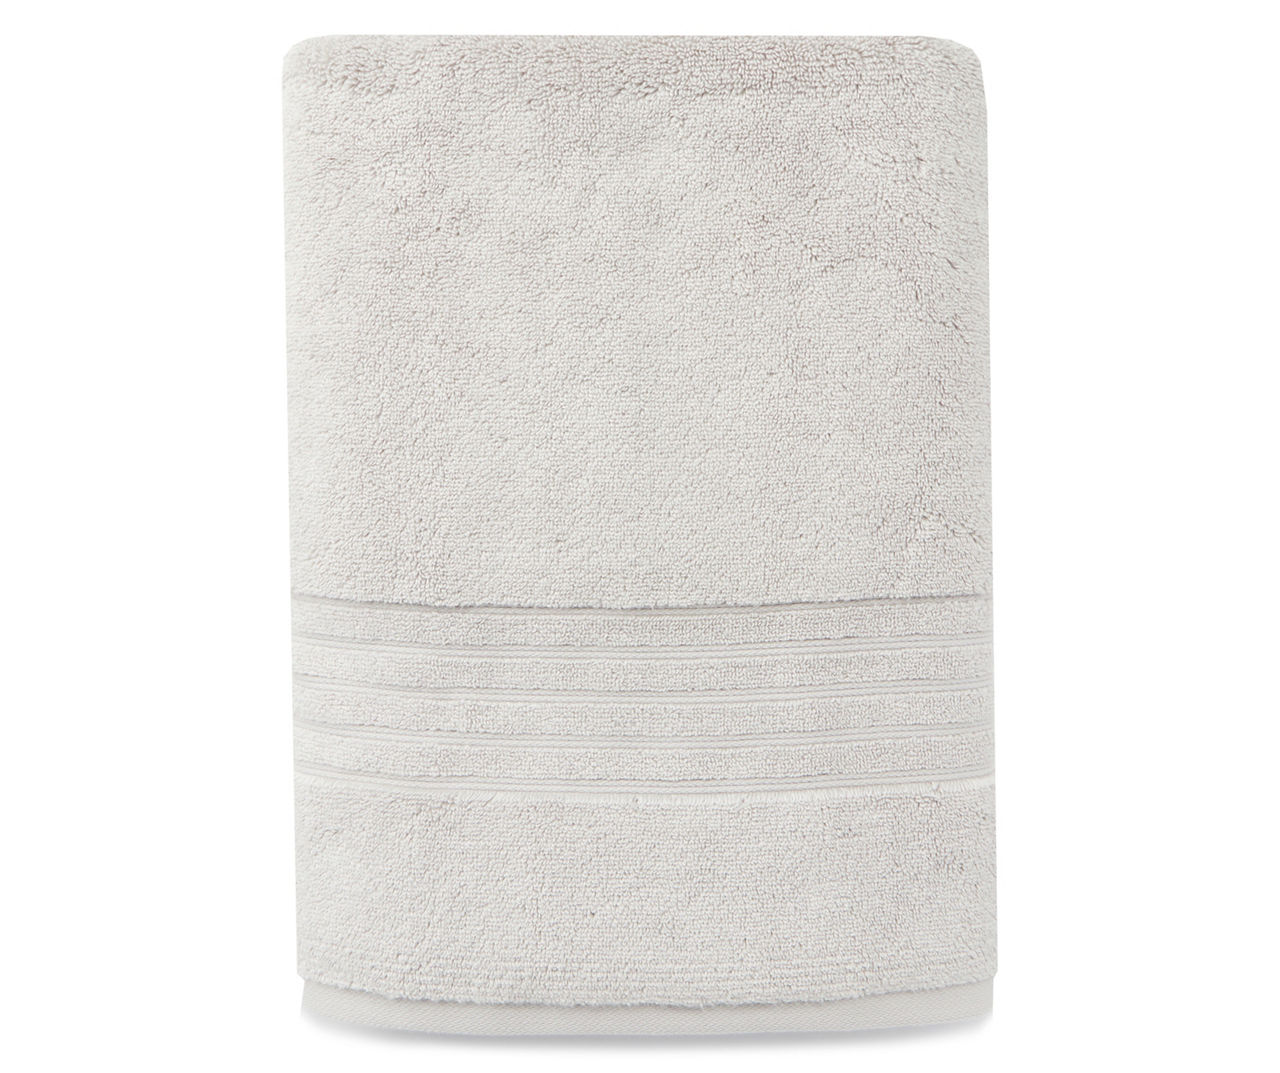 Broyhill Broyhill Trellis Jacquard Bath Towel